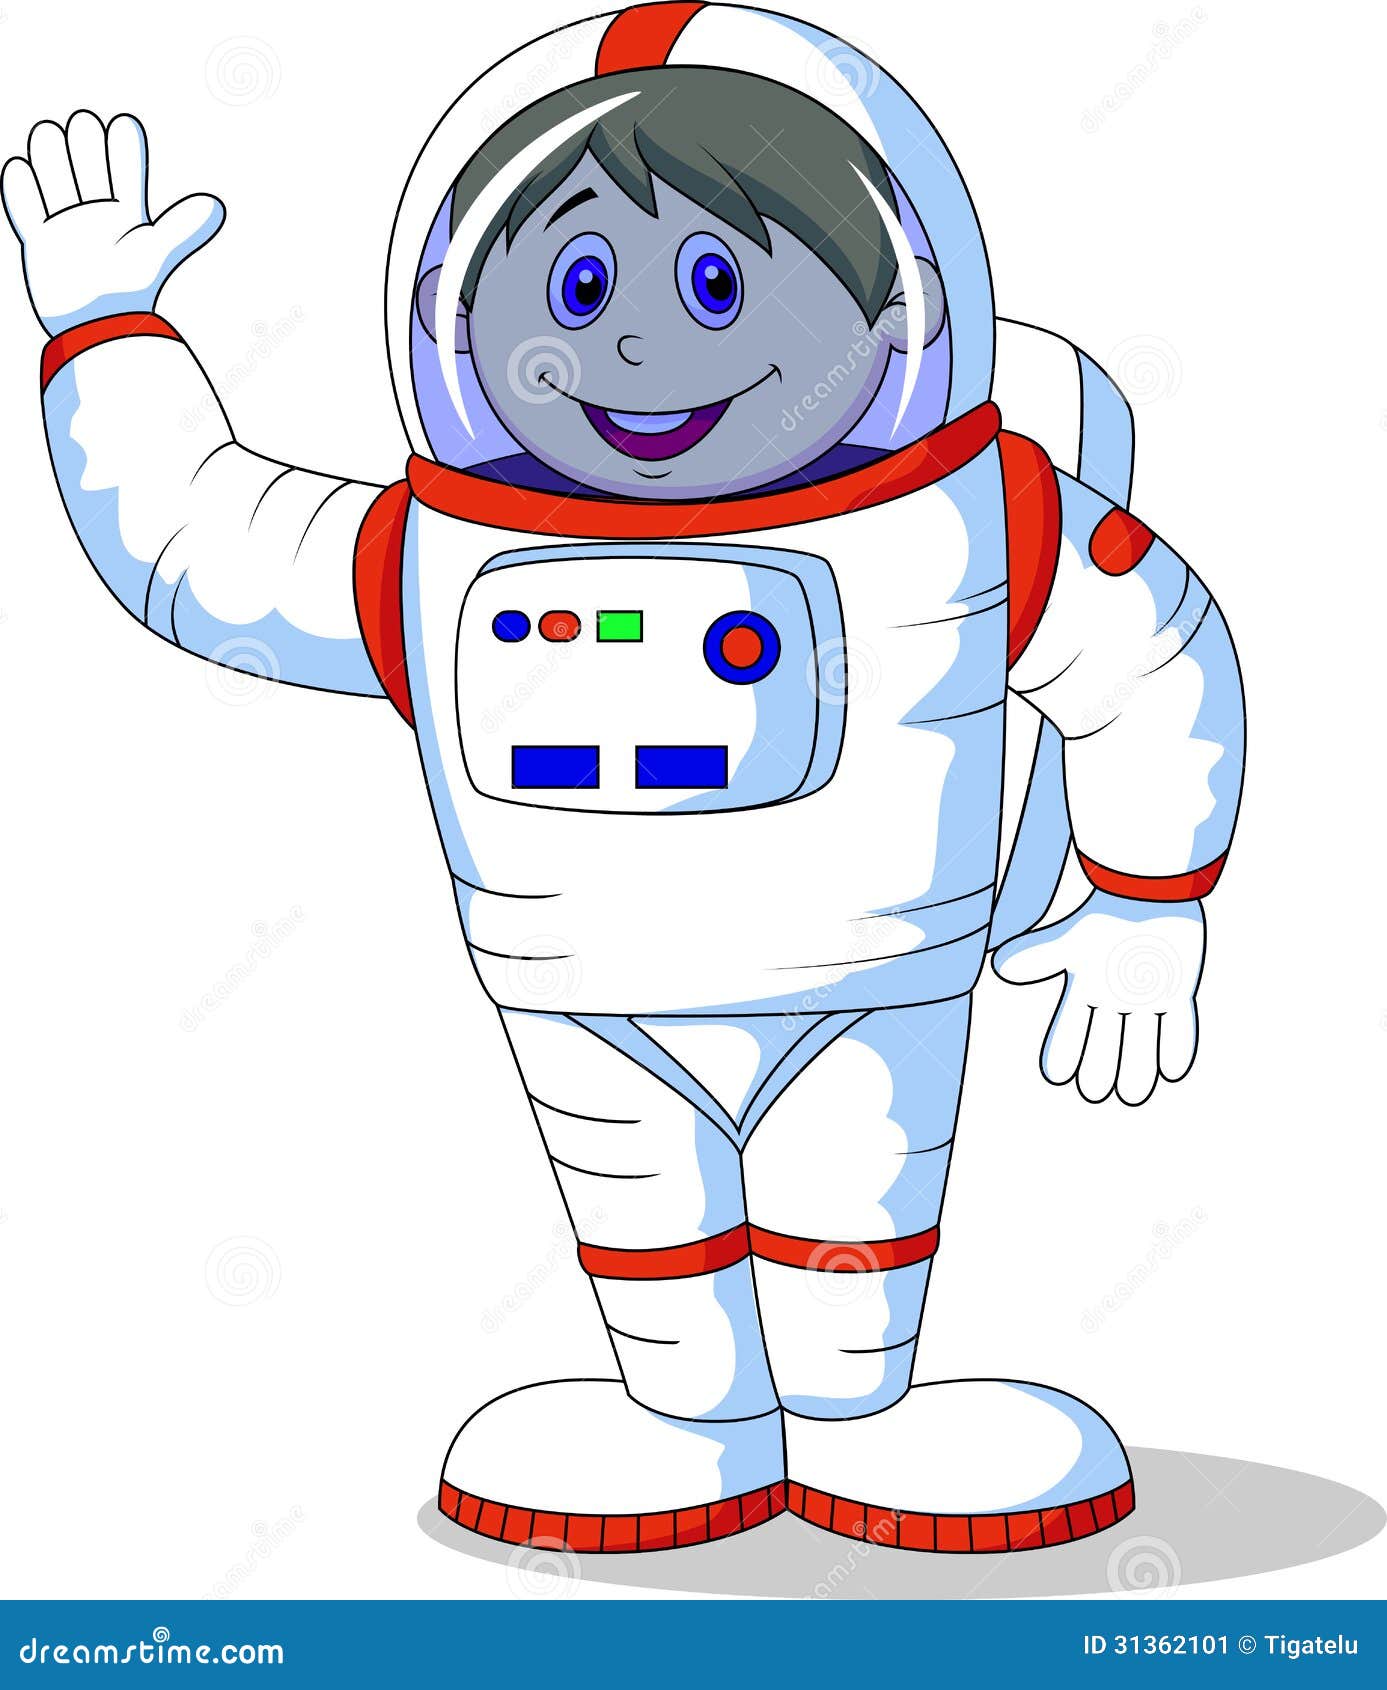 Cute Astronaut Cartoon Illustration 31362101 - Megapixl